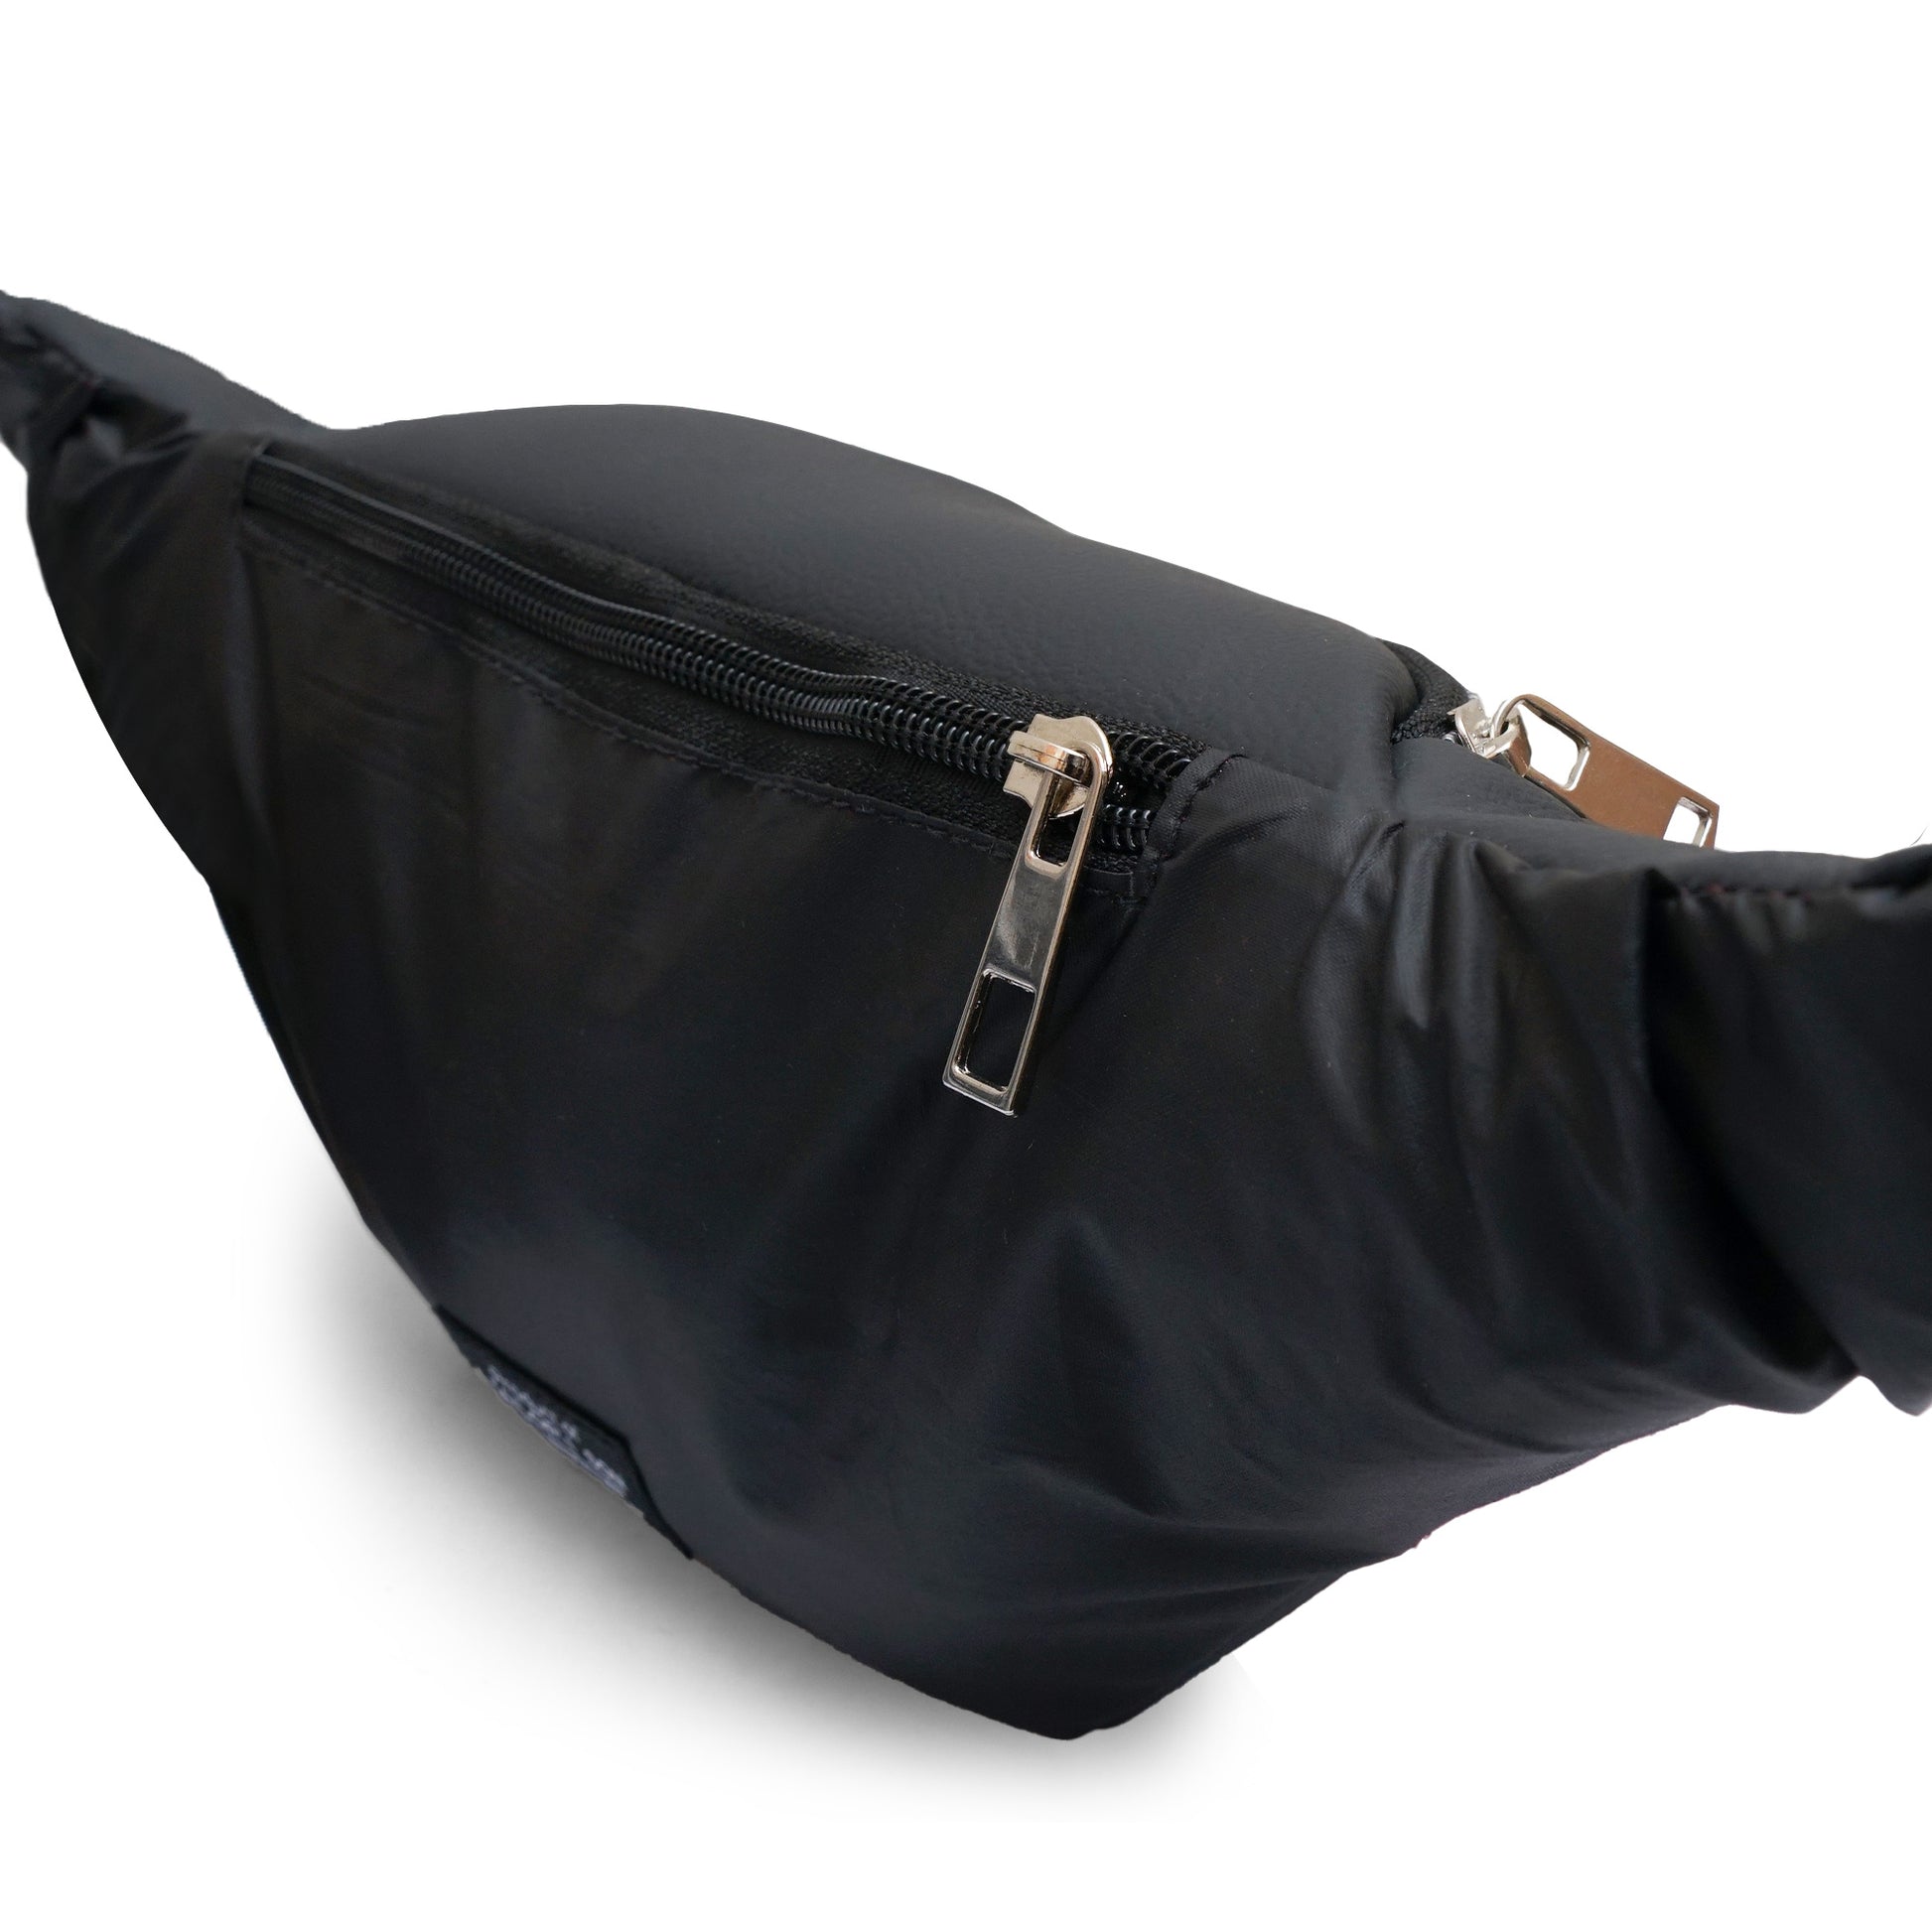 BATMAN Black belt bag and cross body bag